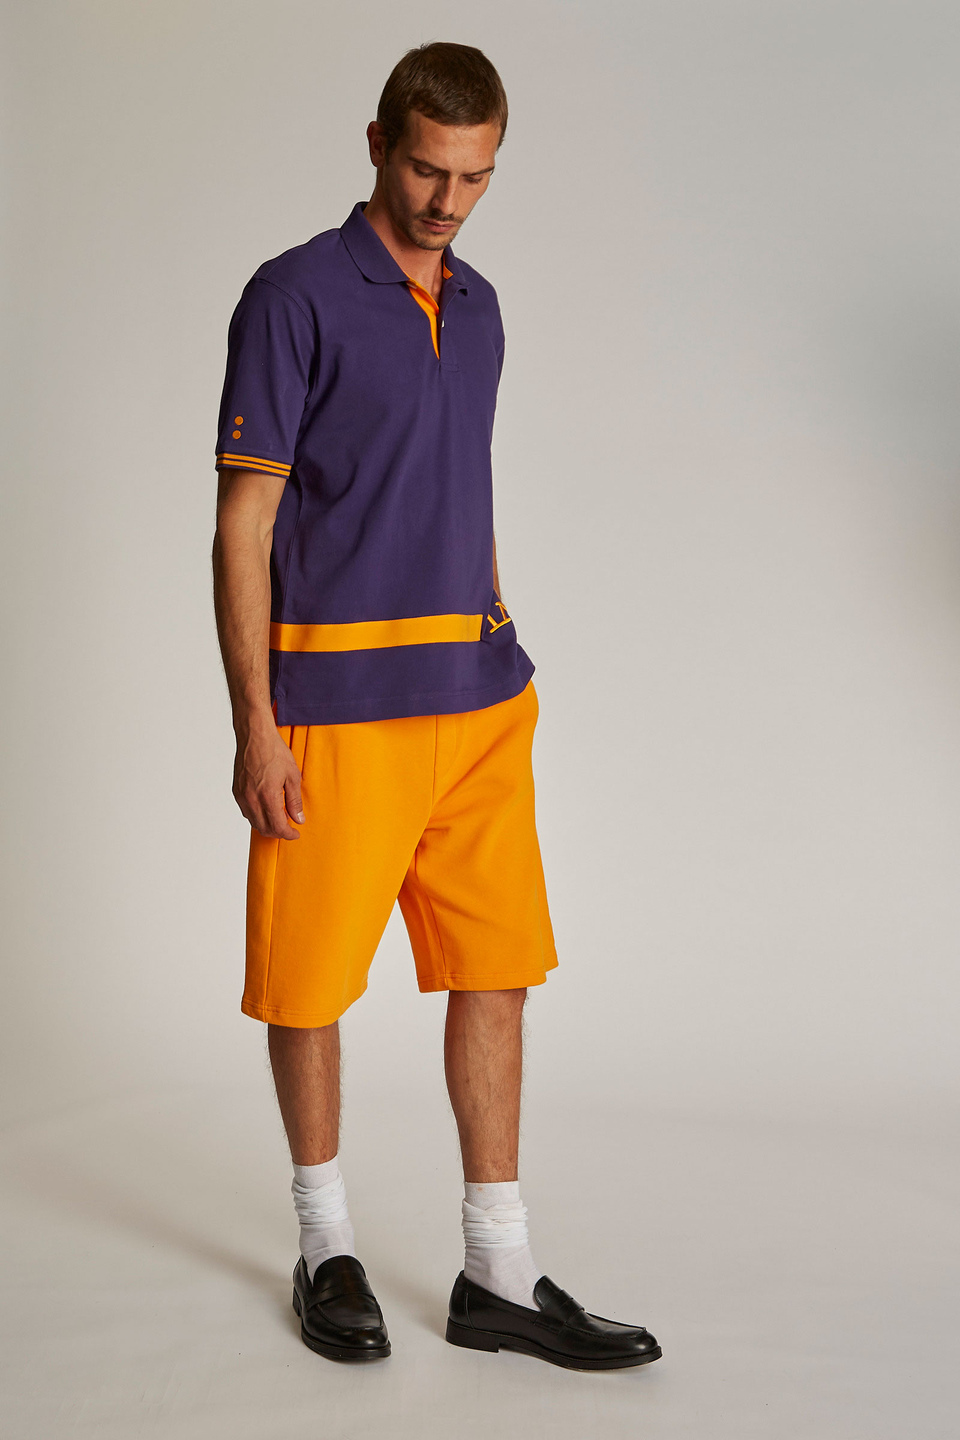 Herren-Poloshirt mit kurzem Arm, oversized Modell | La Martina - Official Online Shop